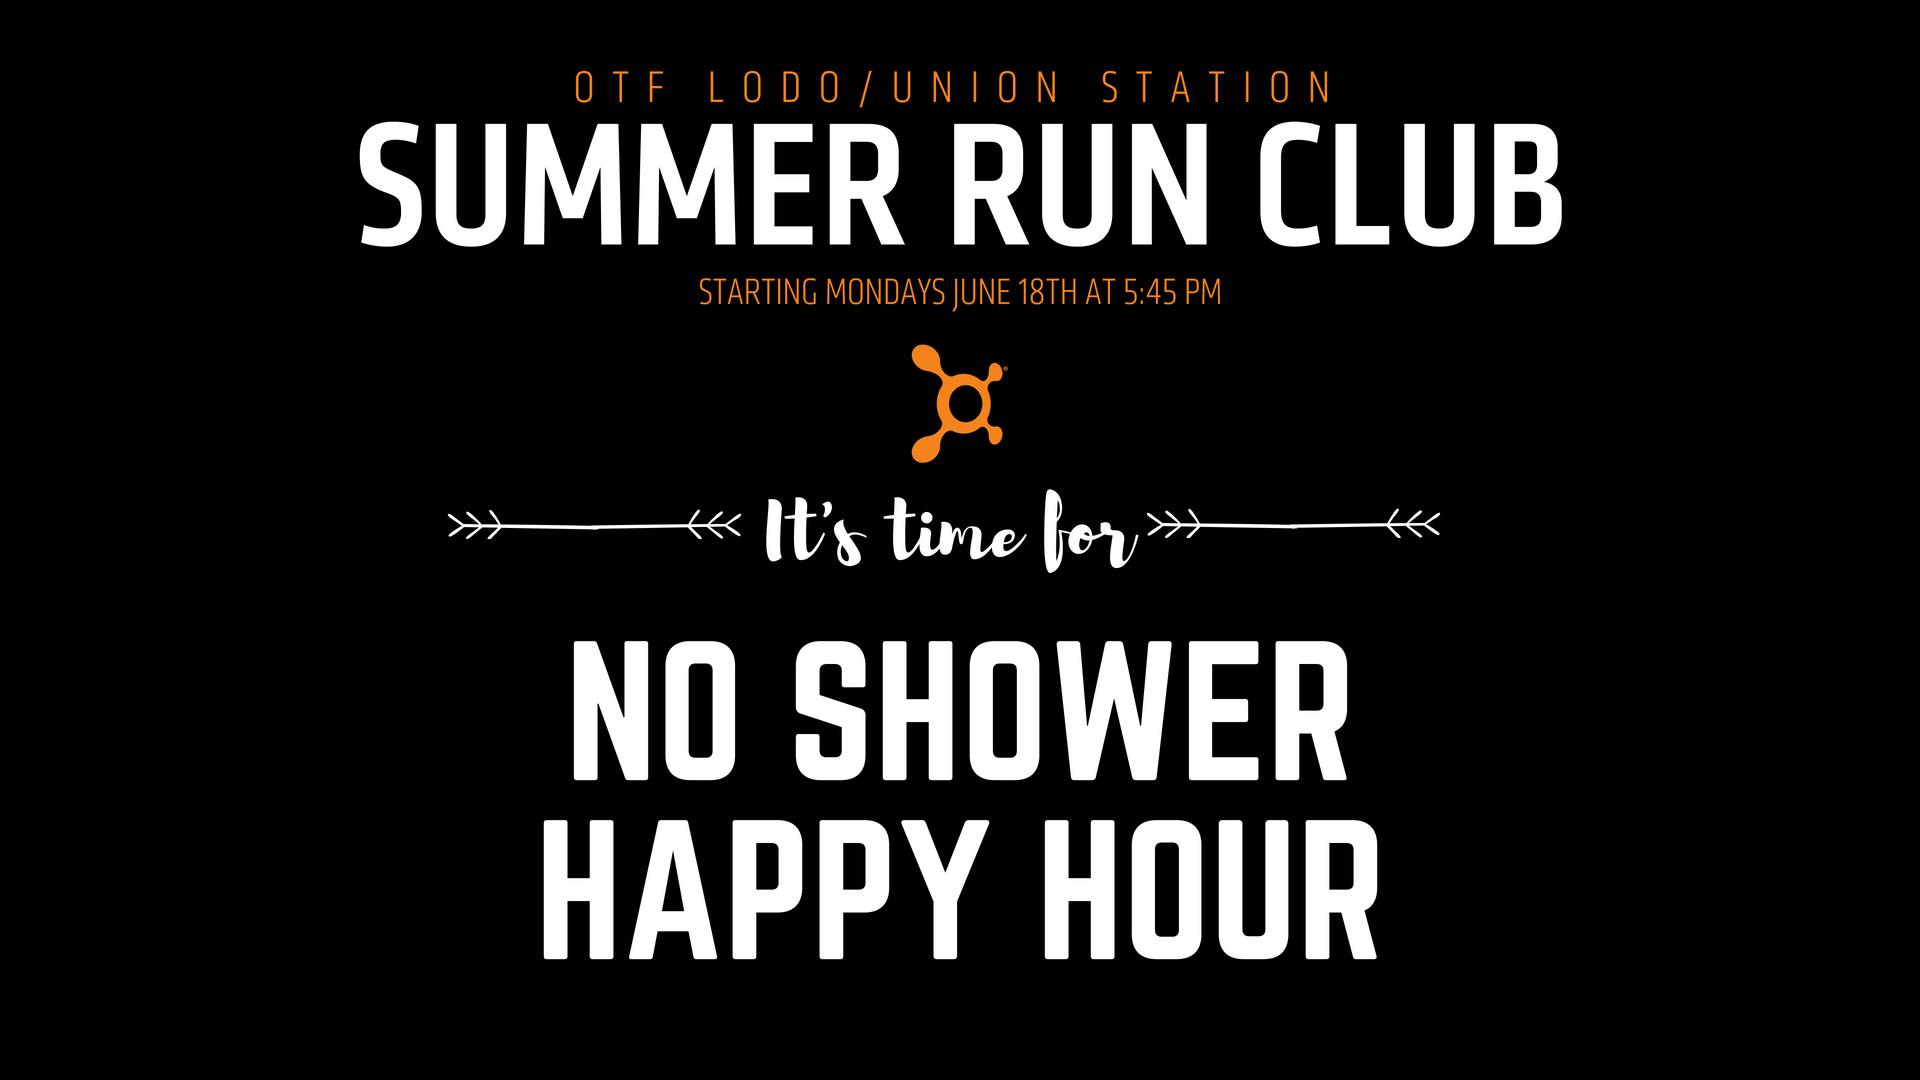 No Shower Happy Hour Run Club